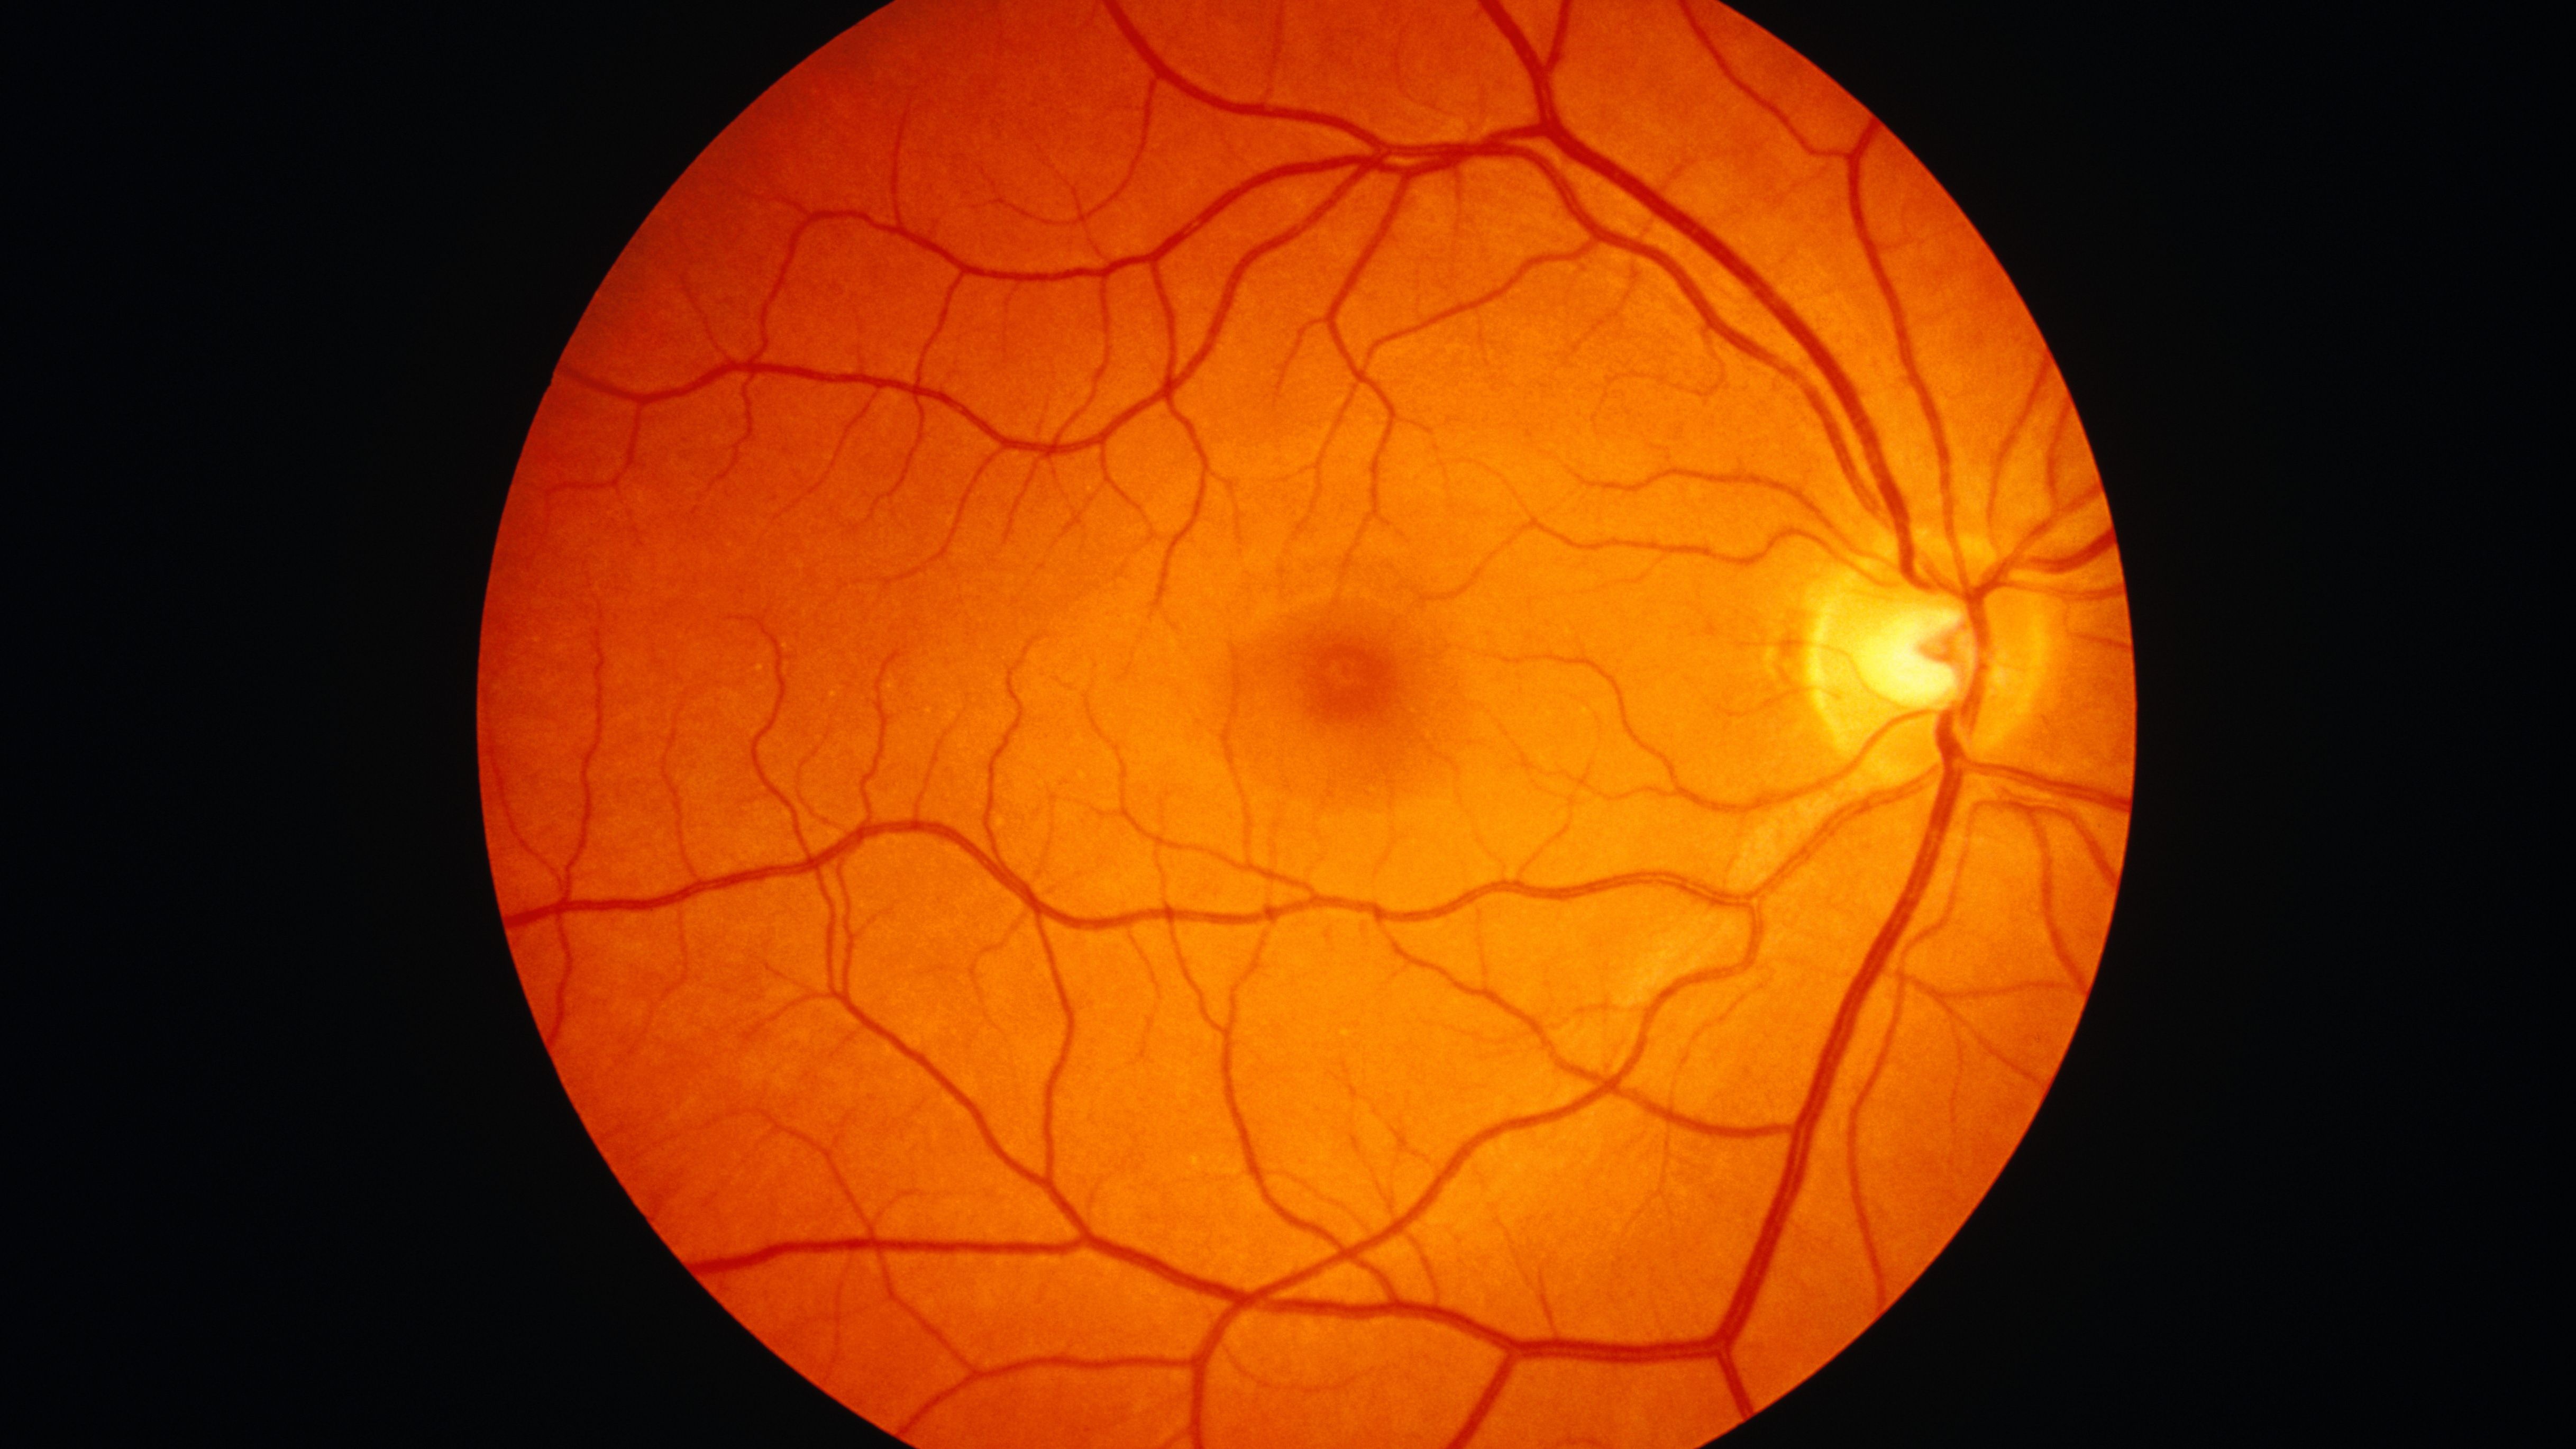 The Human Retina - Intrinsically Photosensitive Ganglion Cells In The Retina